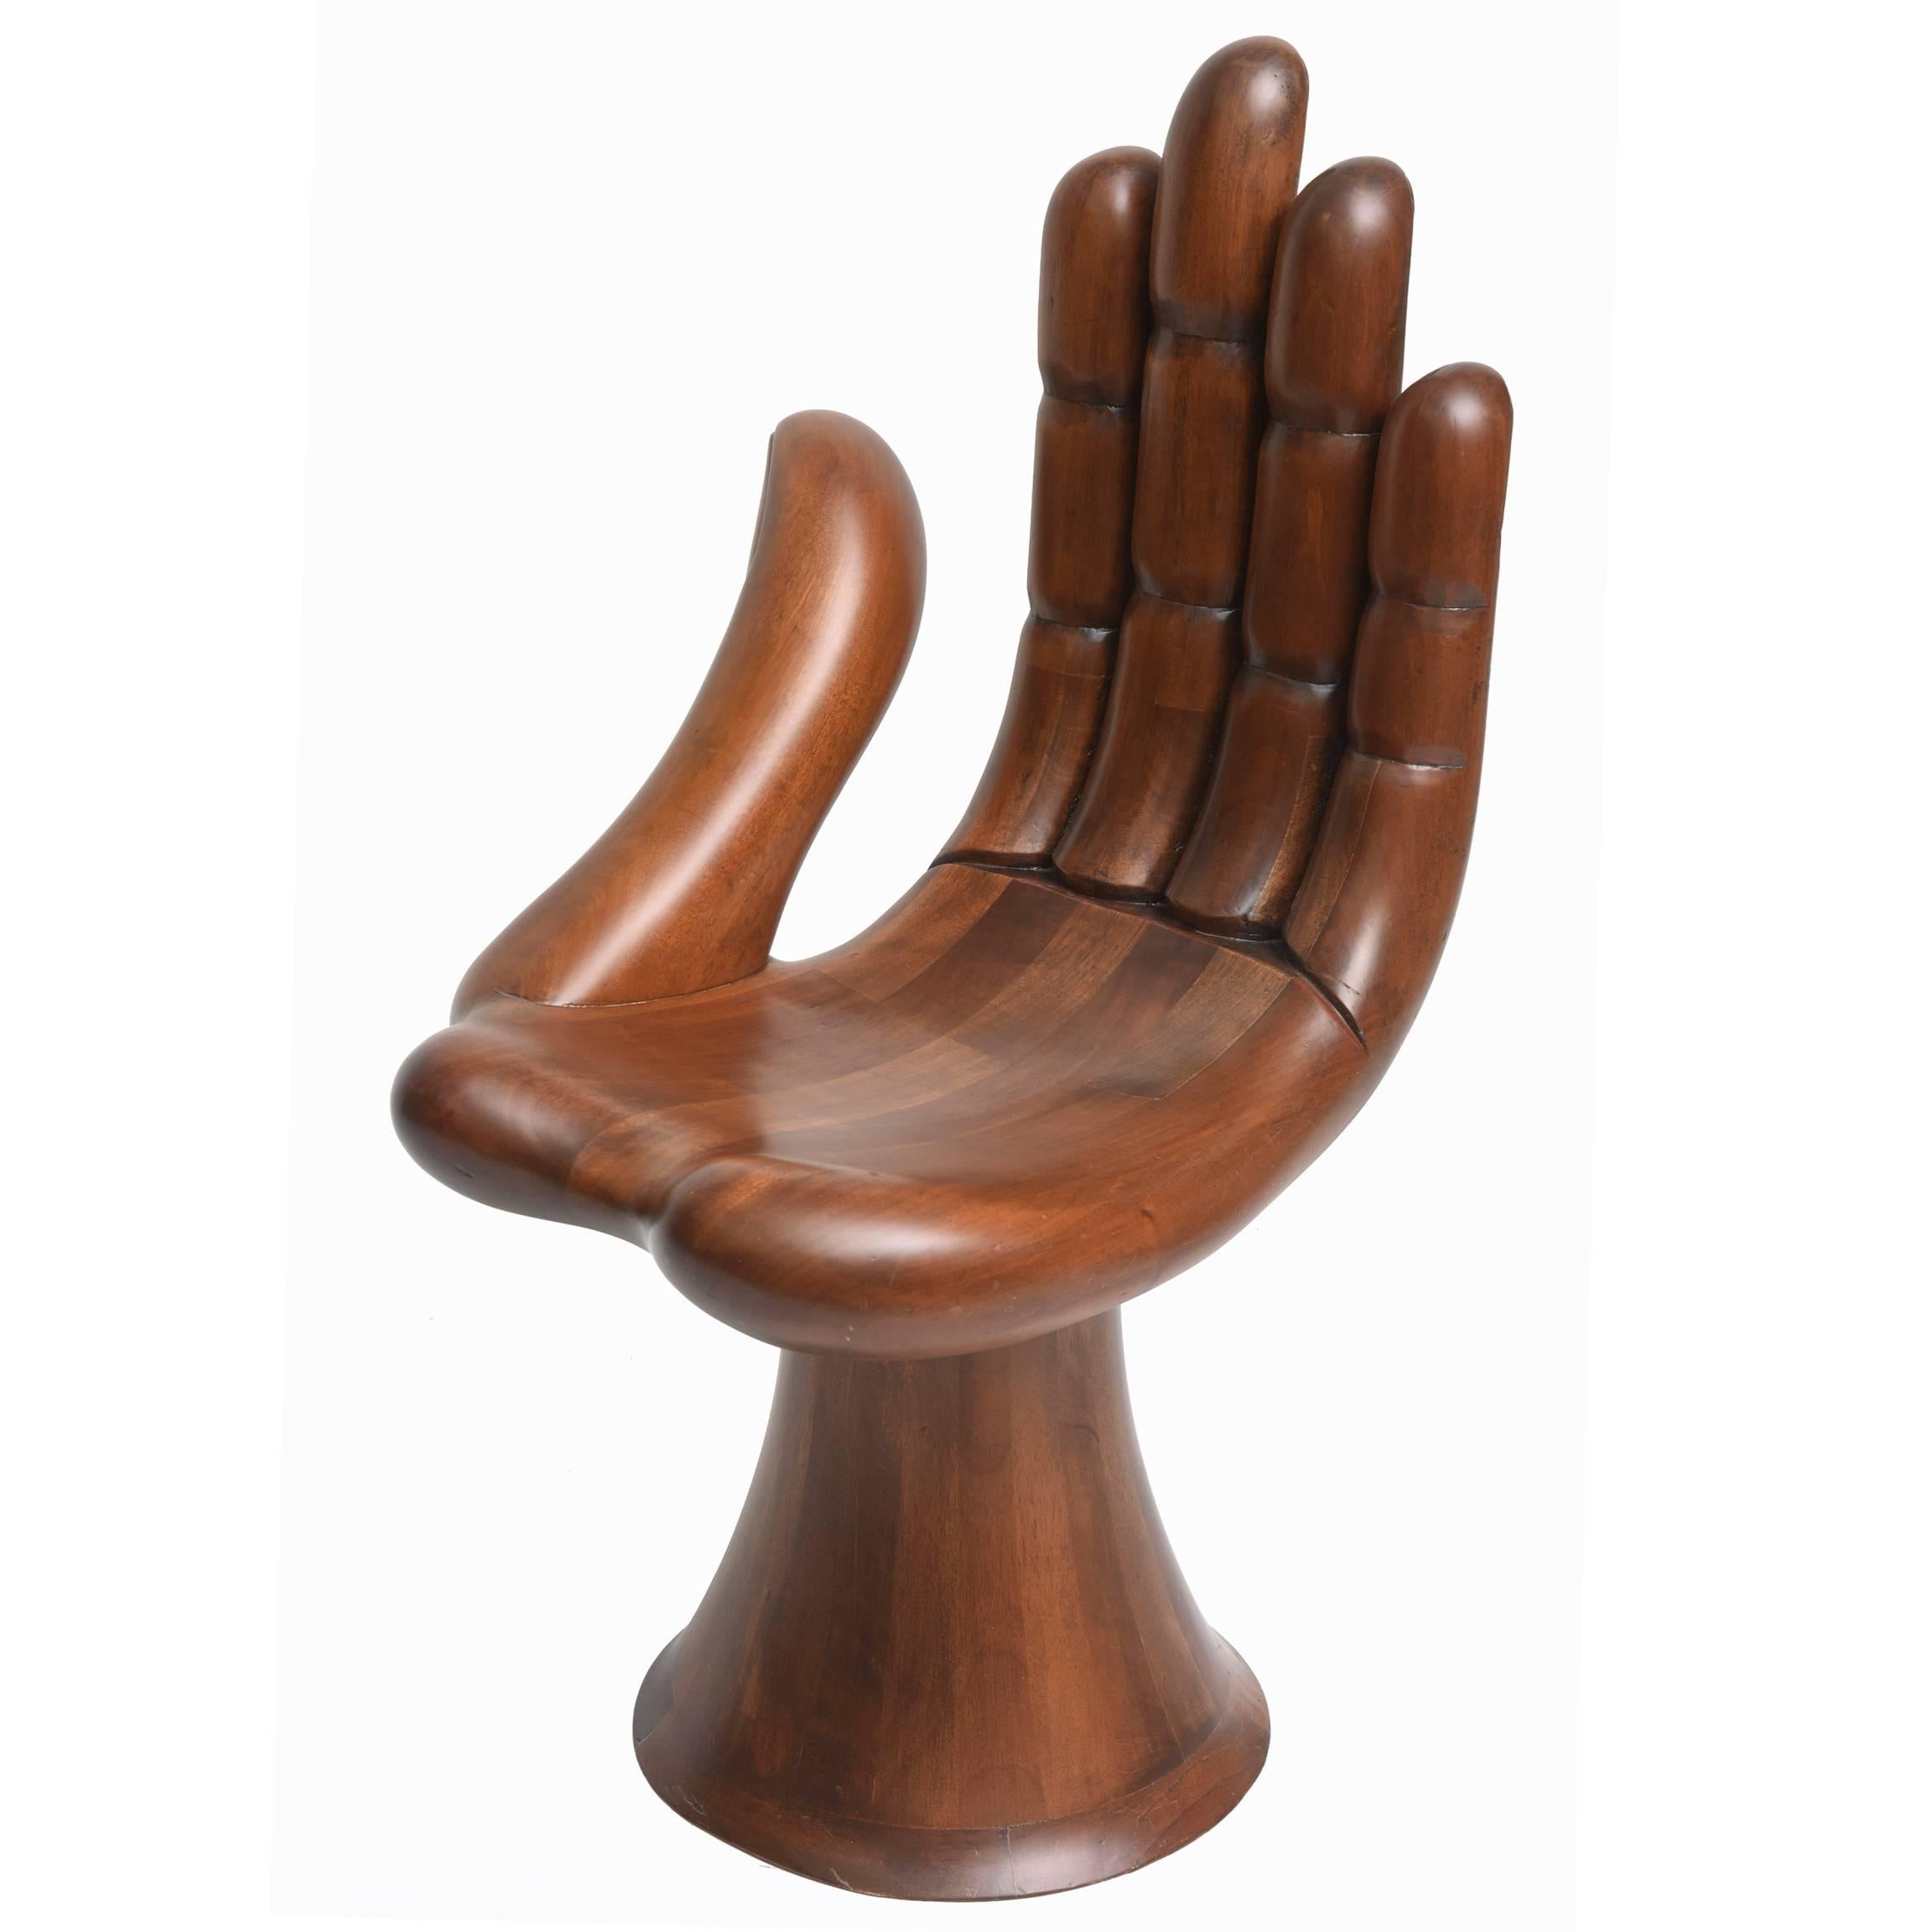 Pedro Friedeberg Hand Chair